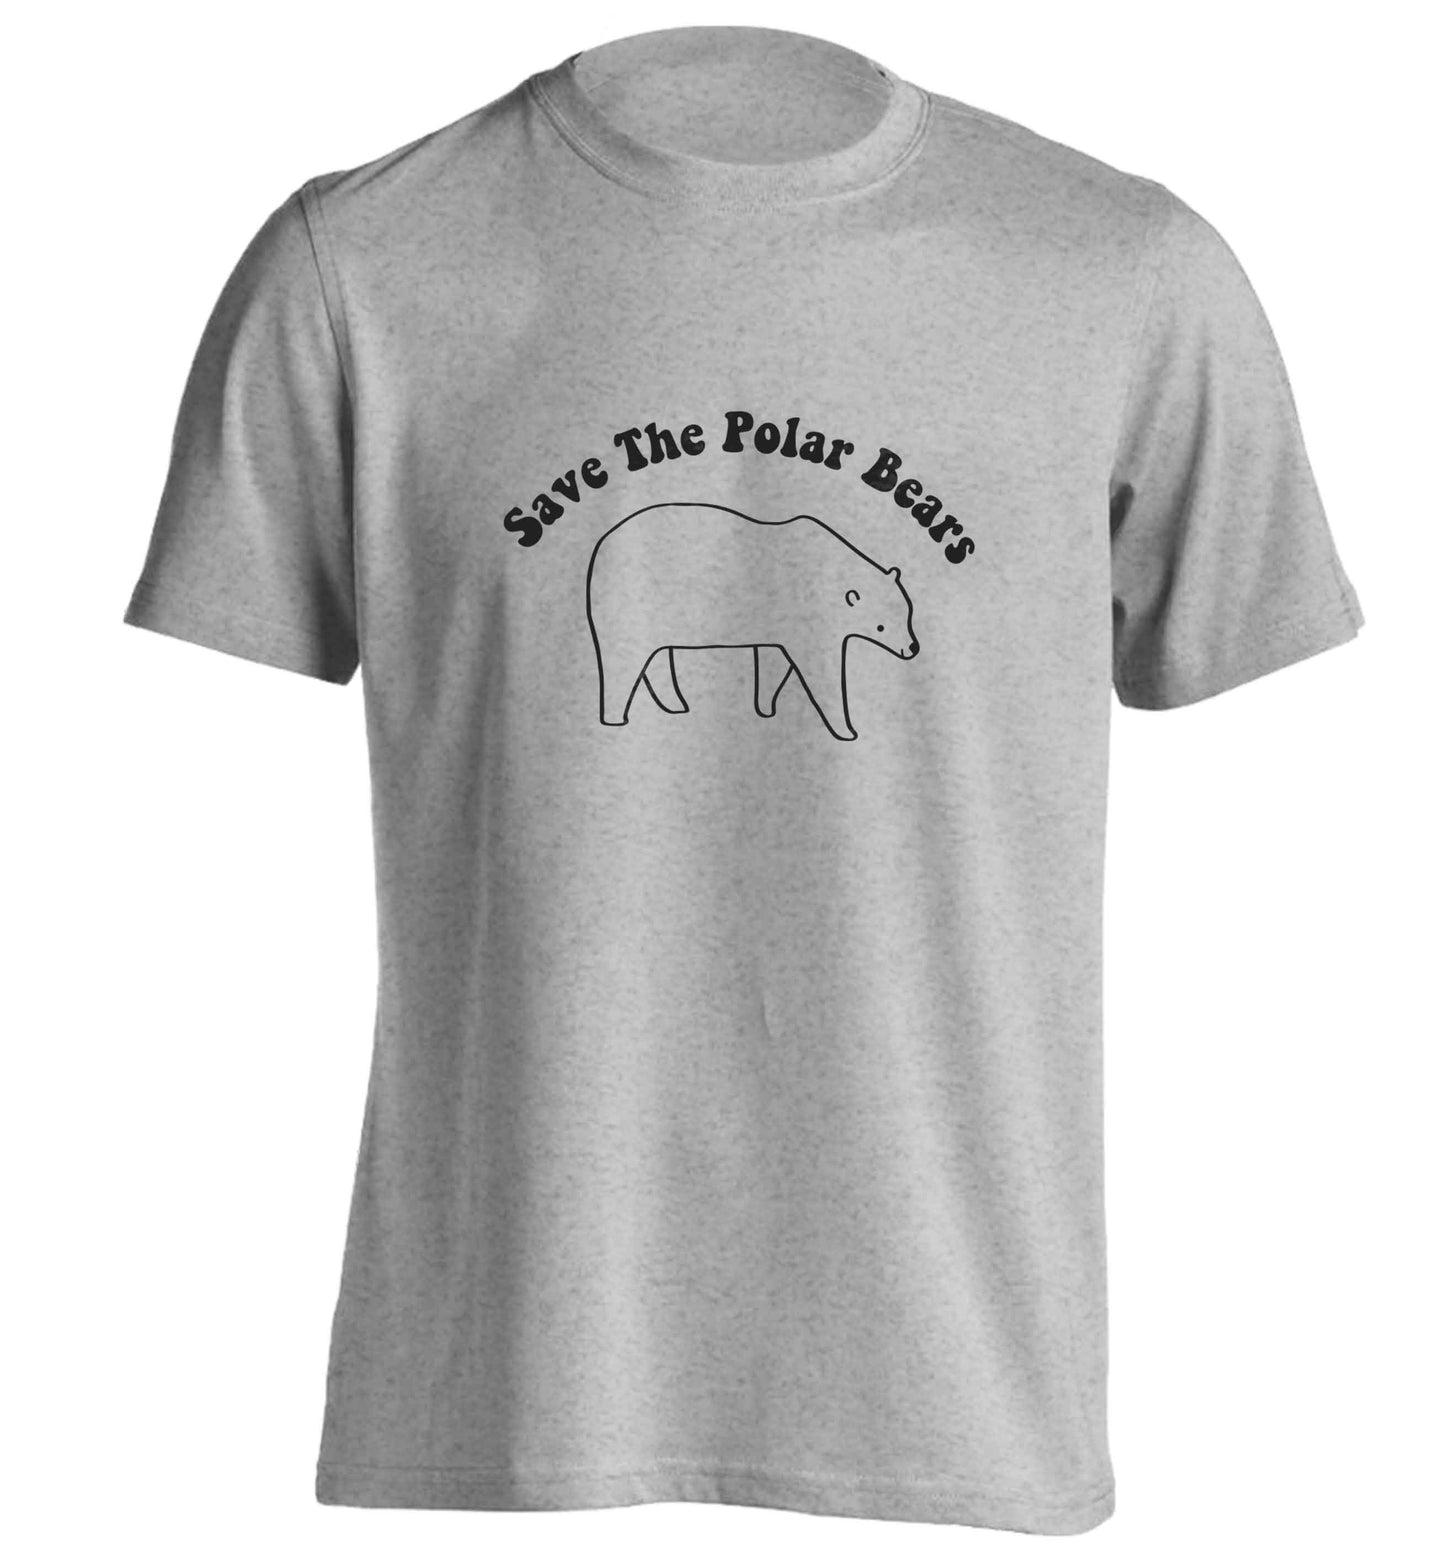 Save The Polar Bears adults unisex grey Tshirt 2XL